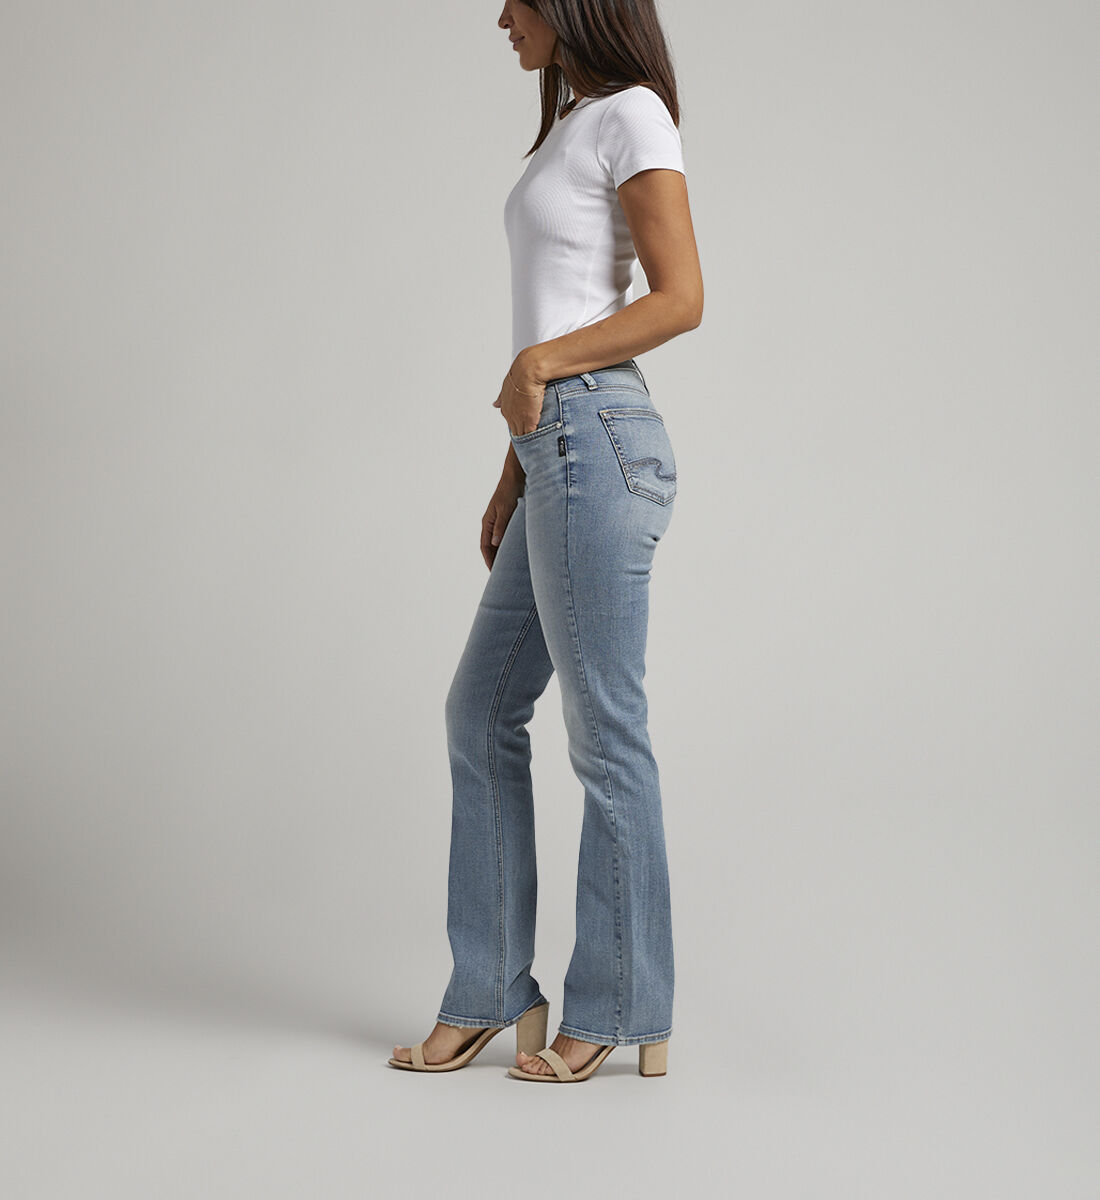 Women's Yoga Pants Pockets Moisture Wicking High Waist Bootcut Gym Pants  Plus size stretch pants - Walmart.com